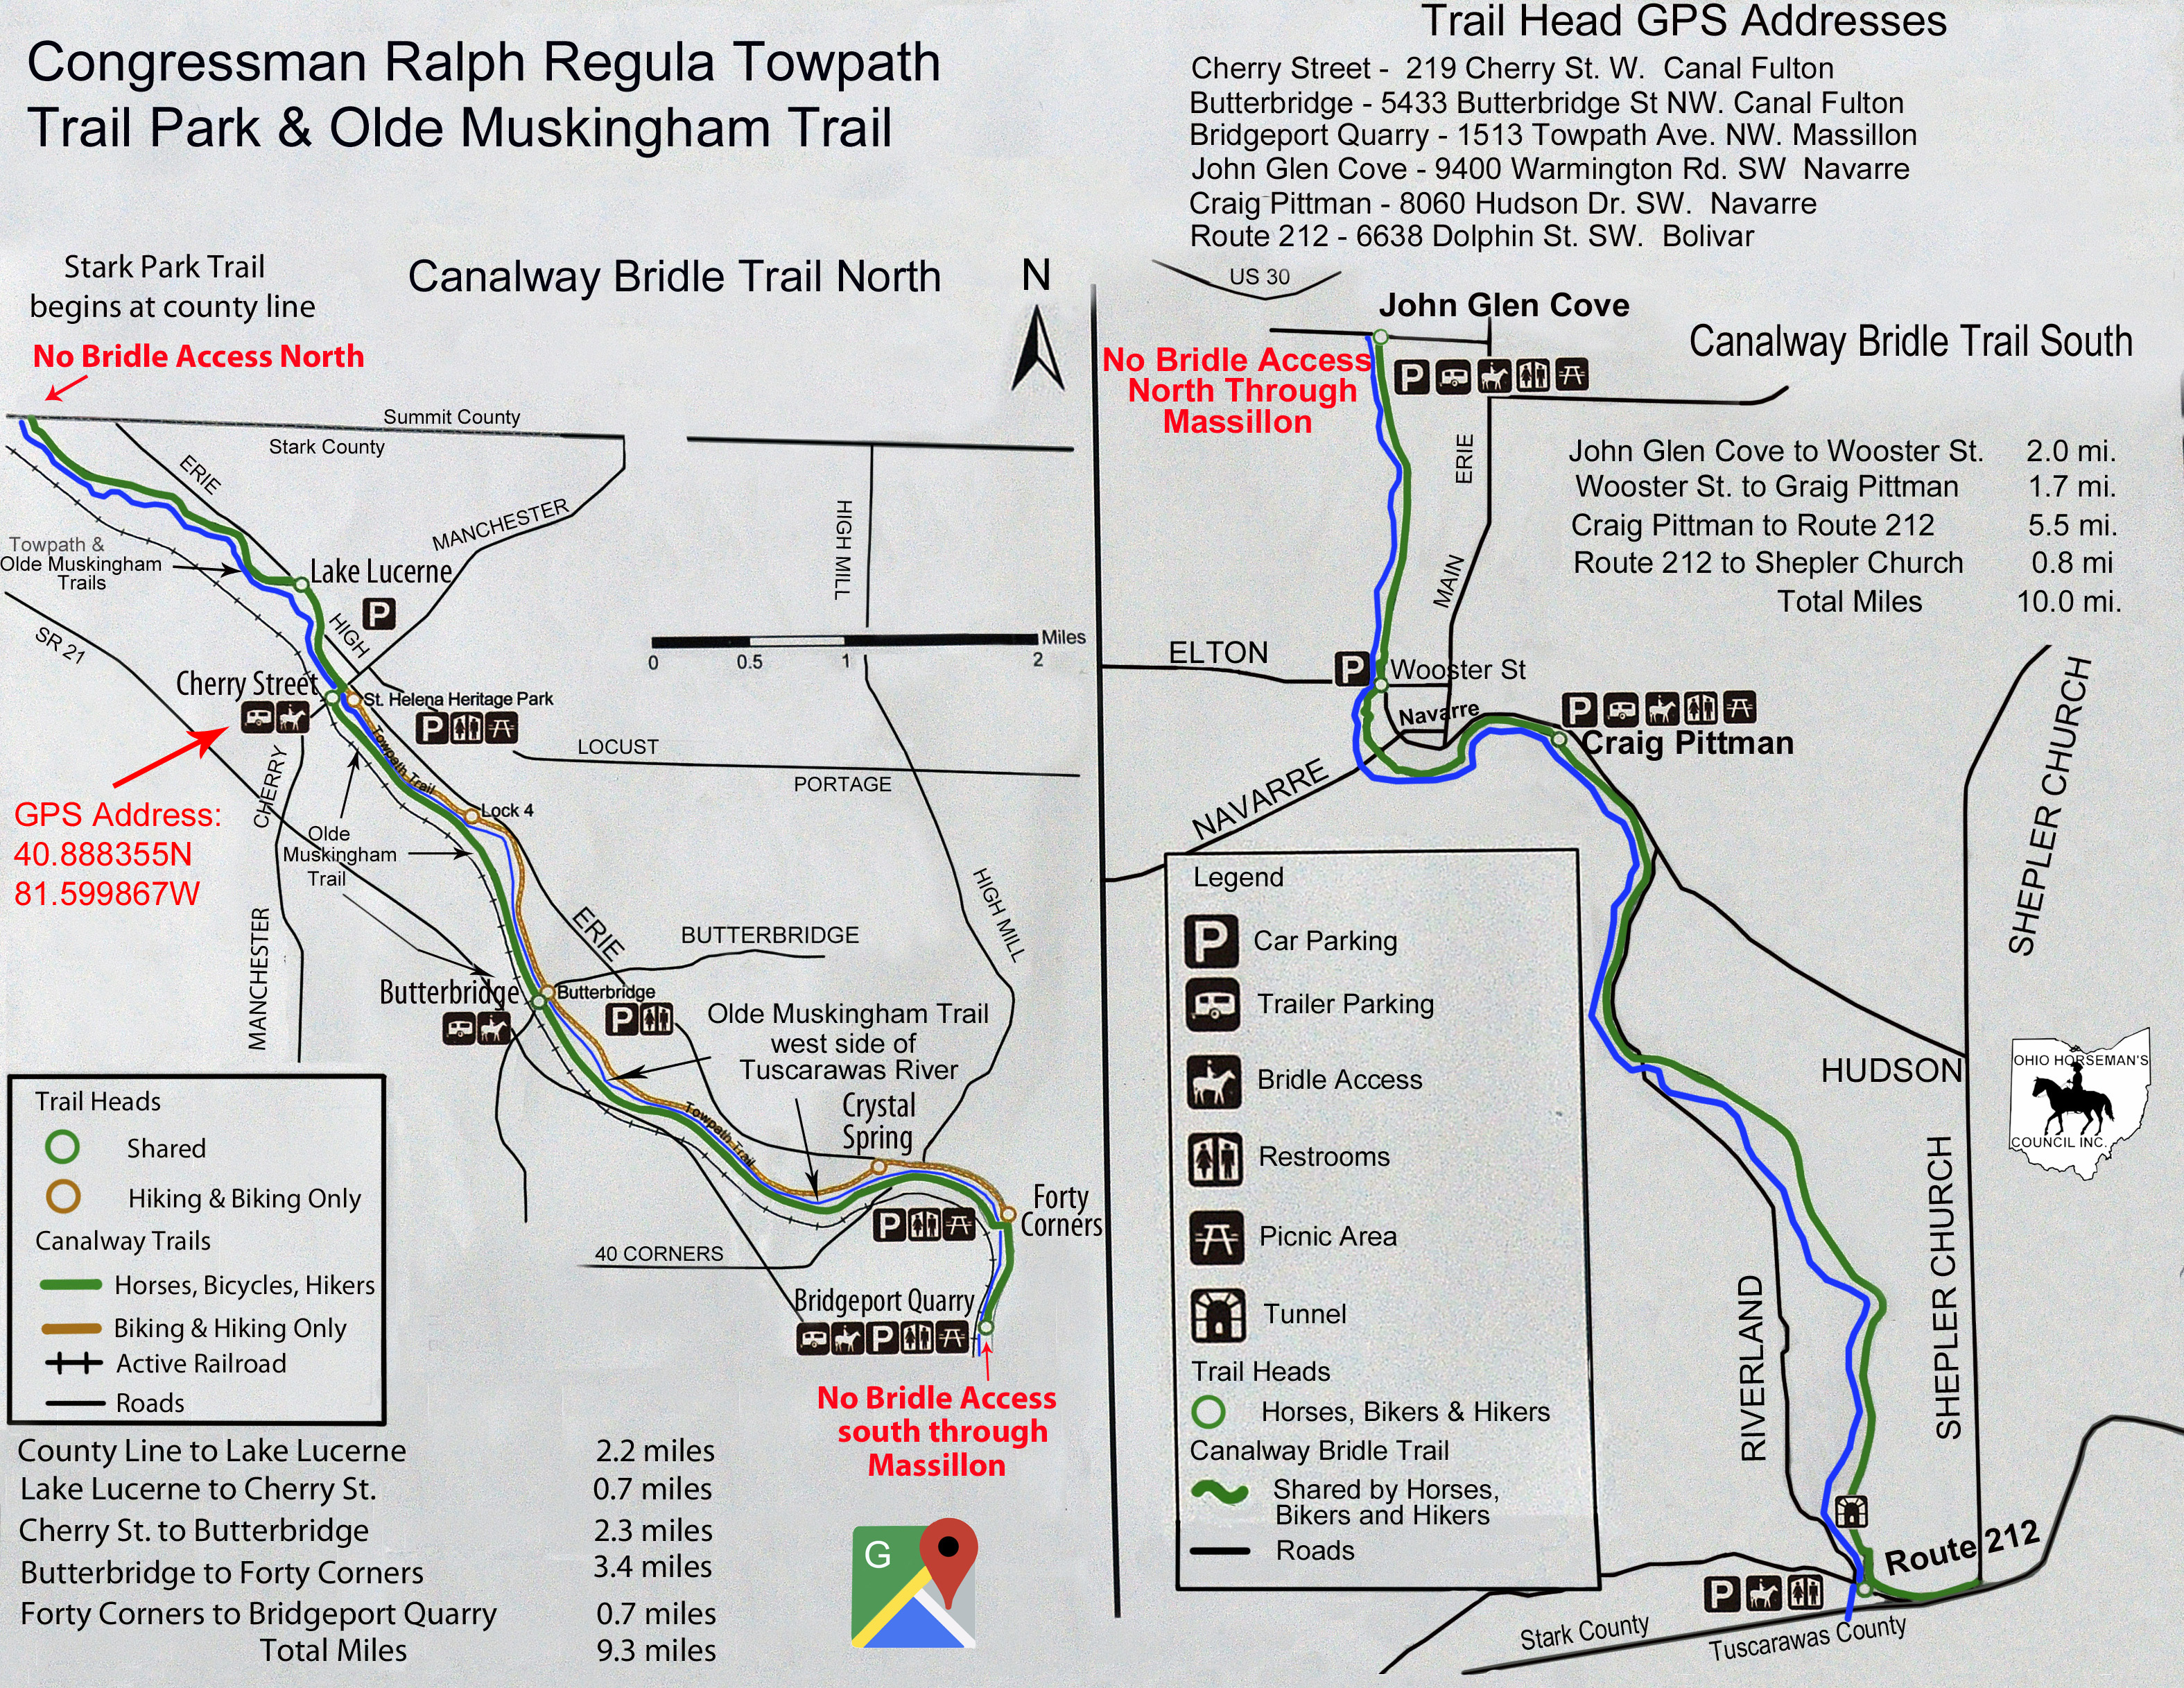 Congressman Ralph Regula Towpath Trail